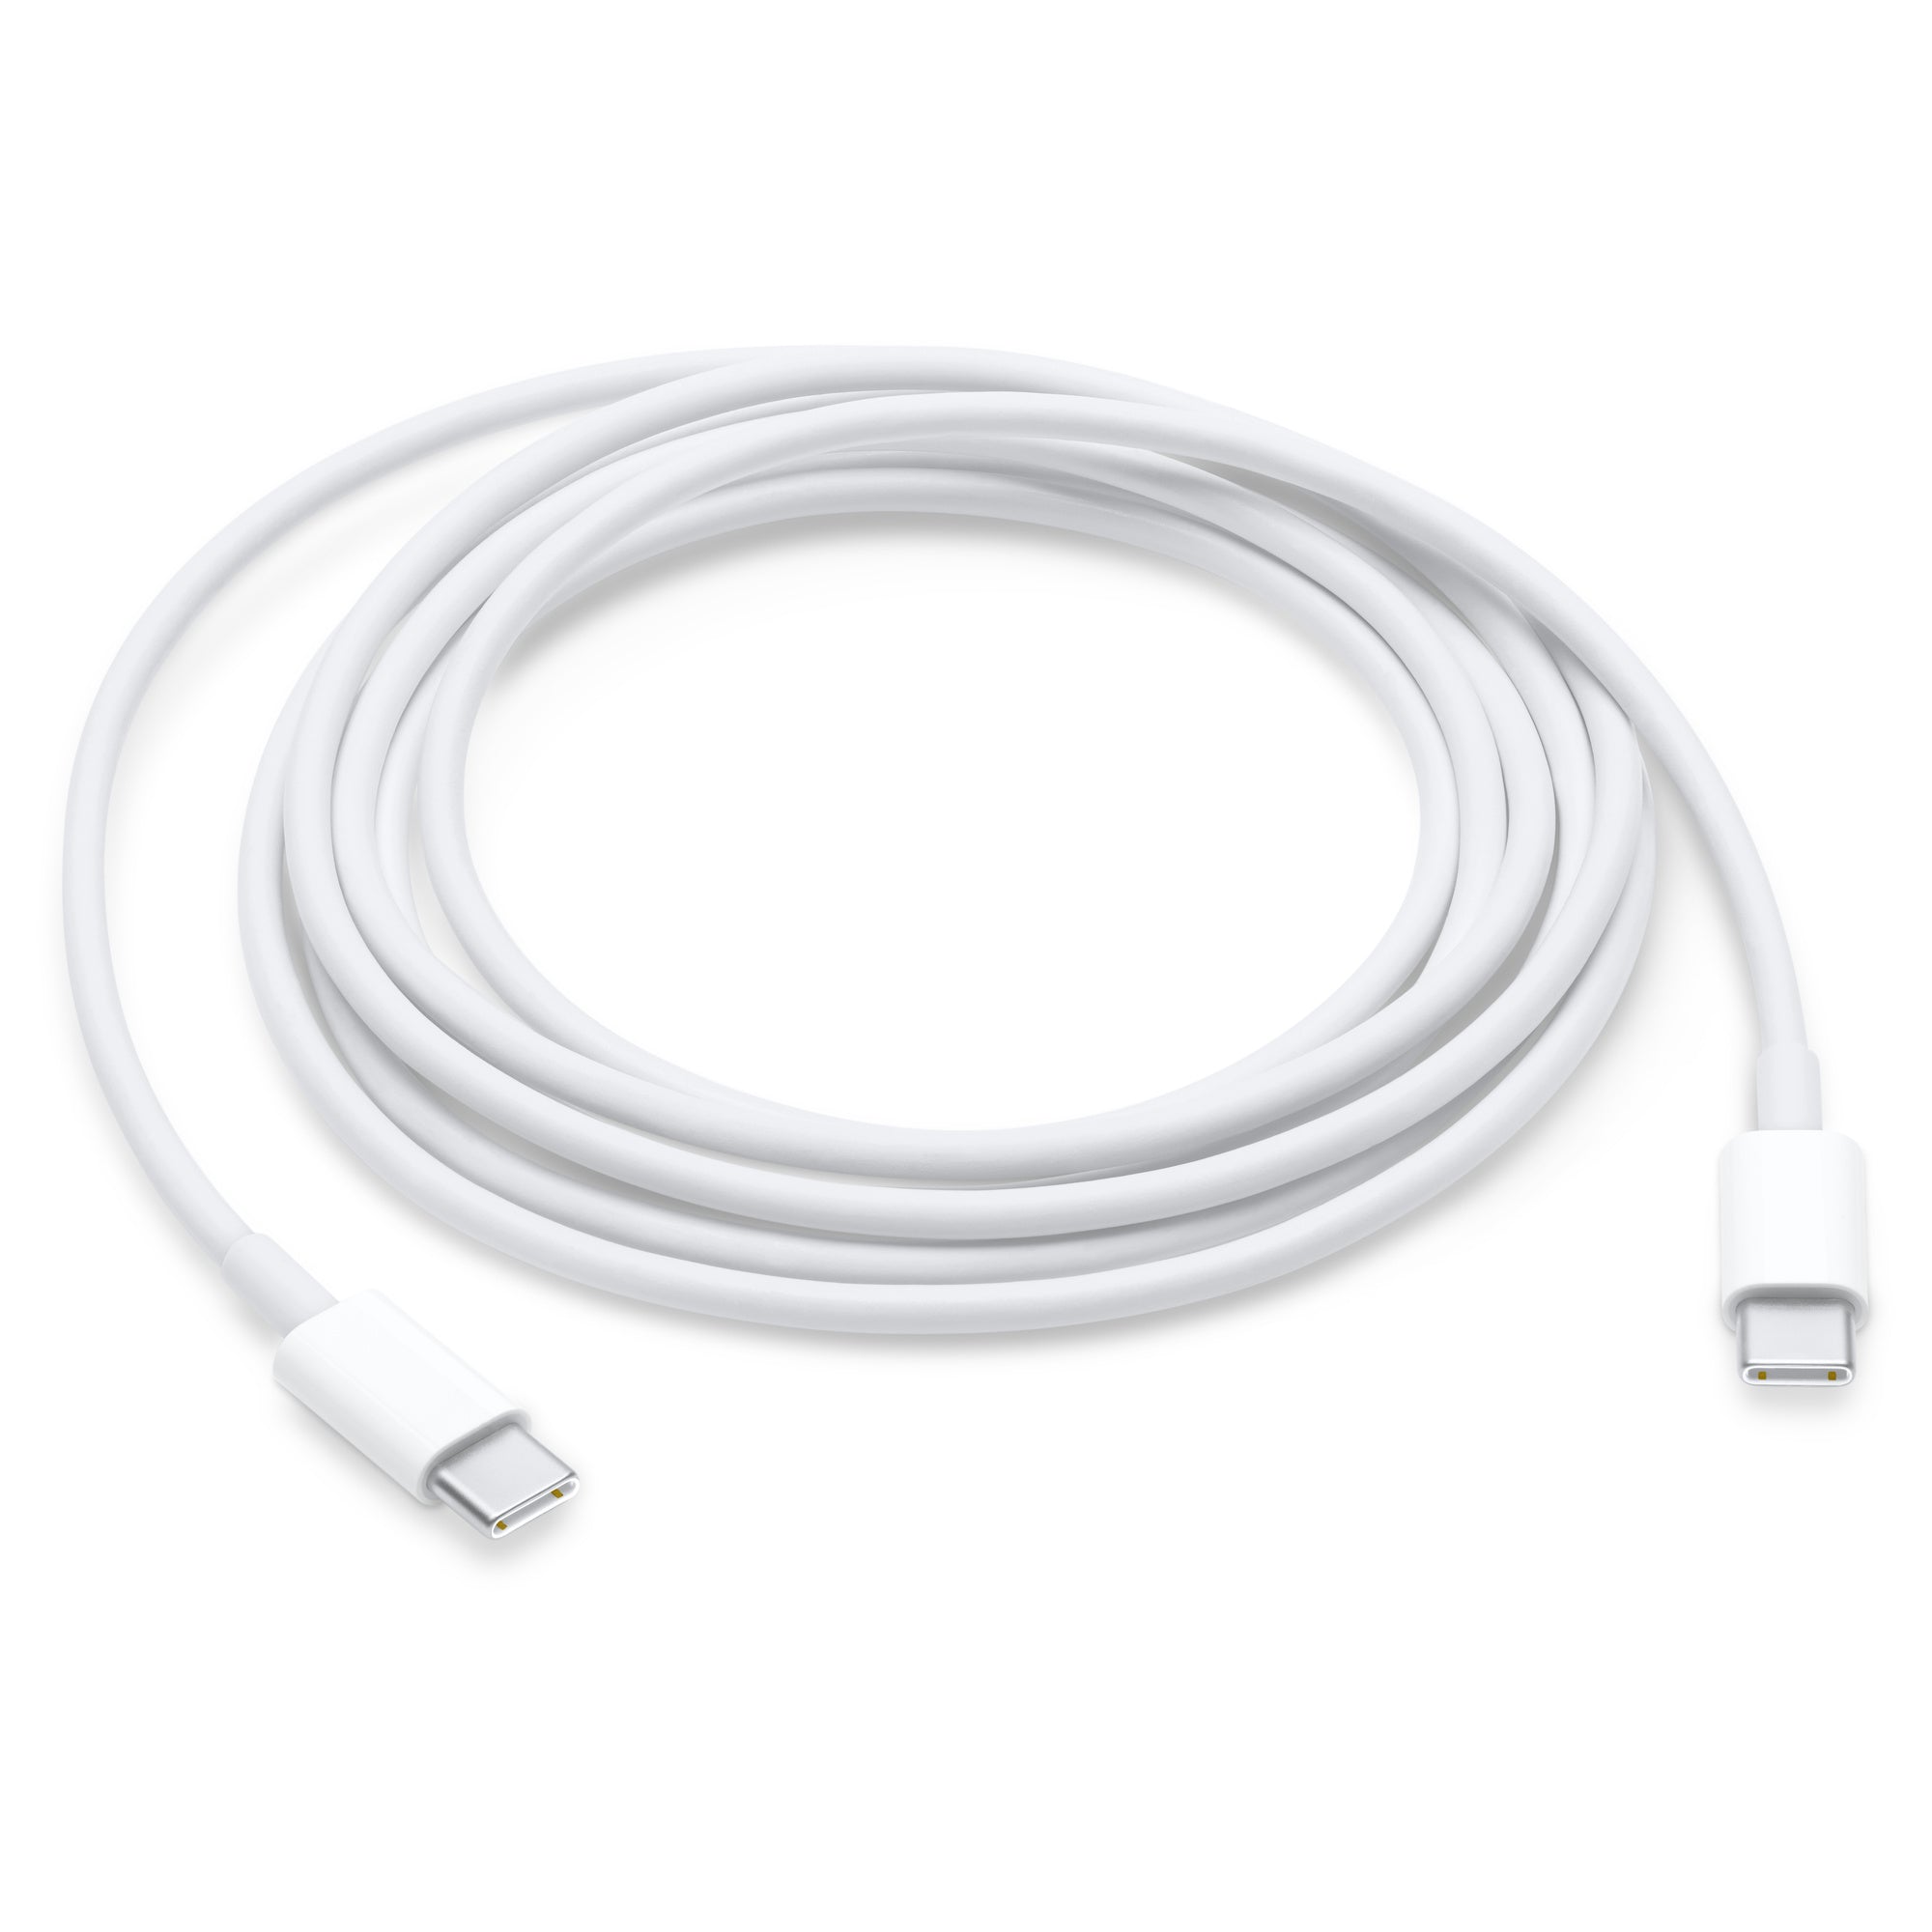 APPLE USB-C Charge Cable Charging Cord 1m | usbc iPad MacBook Mac | MUF72AM/A GB